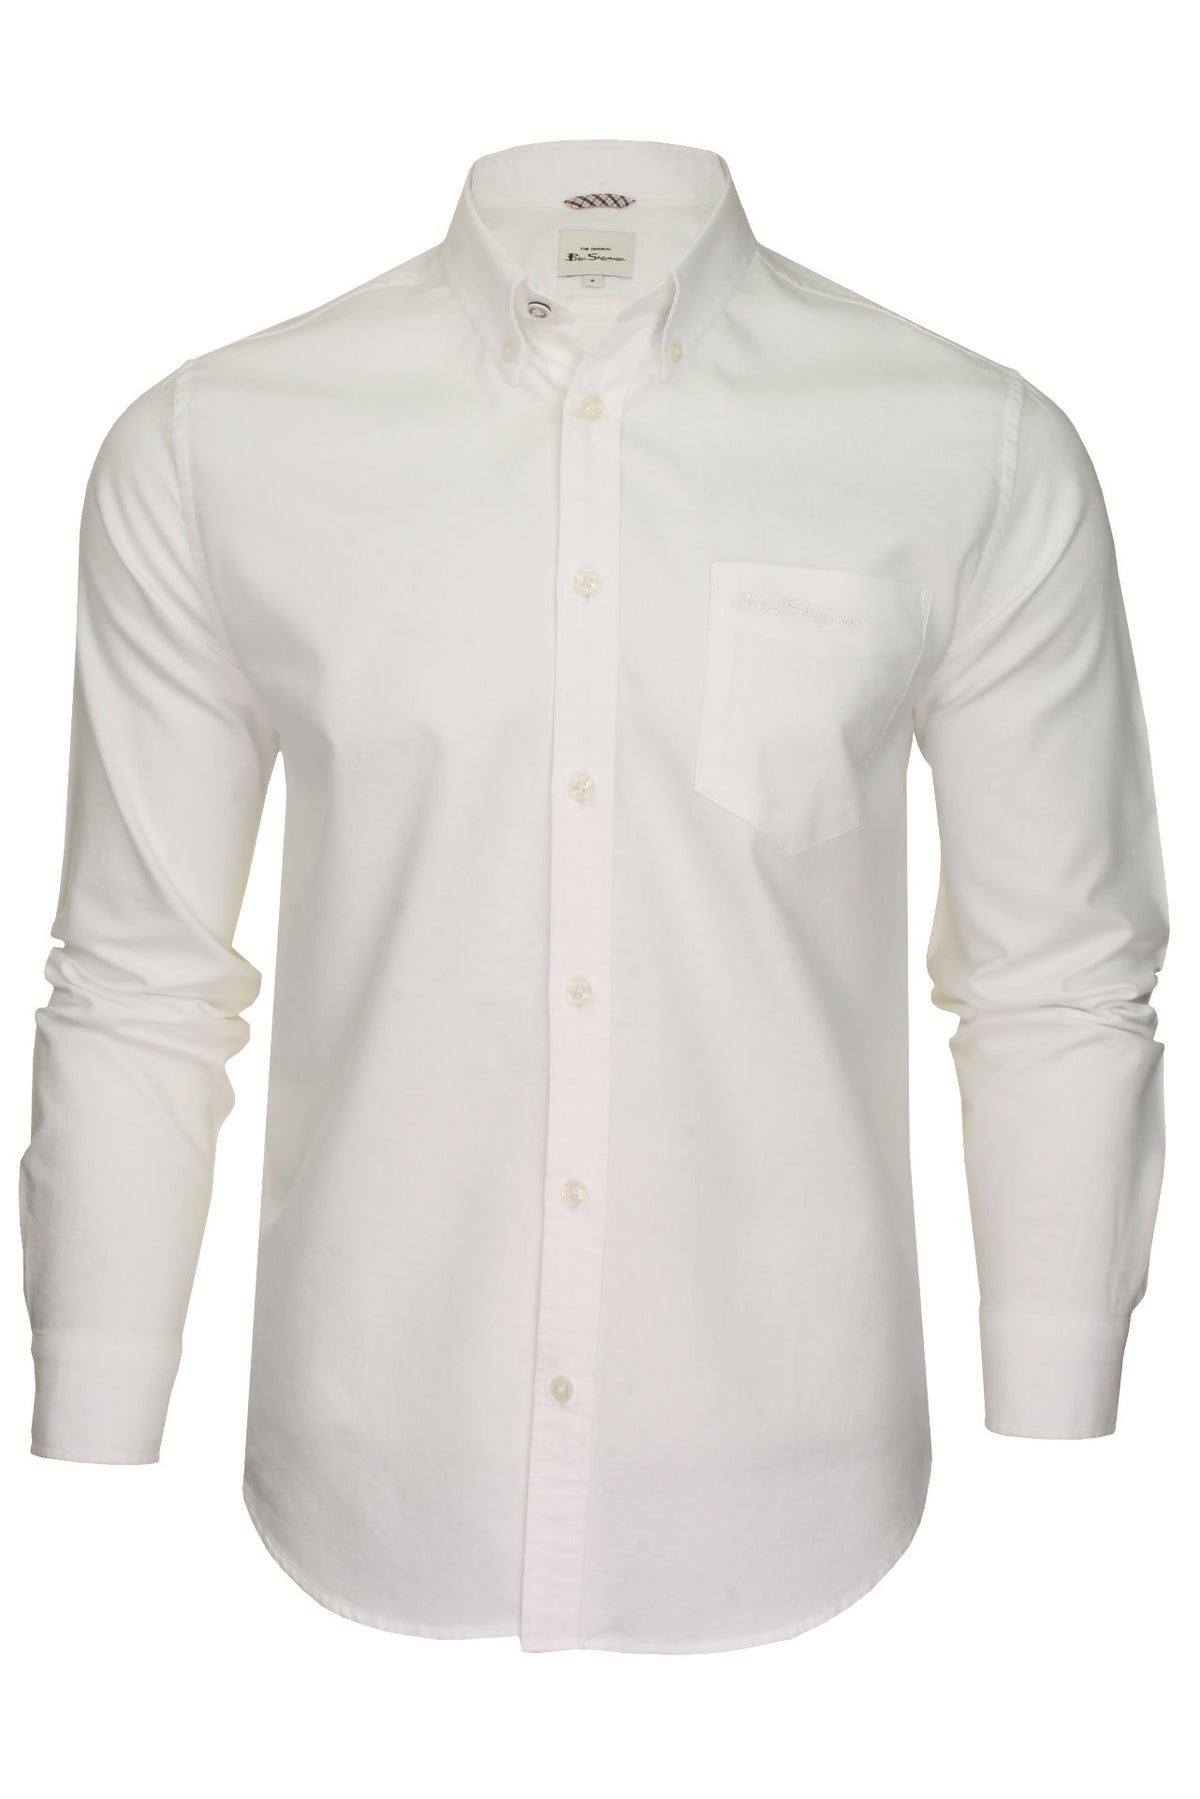 Ben Sherman Mens Oxford Shirt Long Sleeved (Embroidered Logo), 01, 48578, White (Embroidered Pocket Logo)